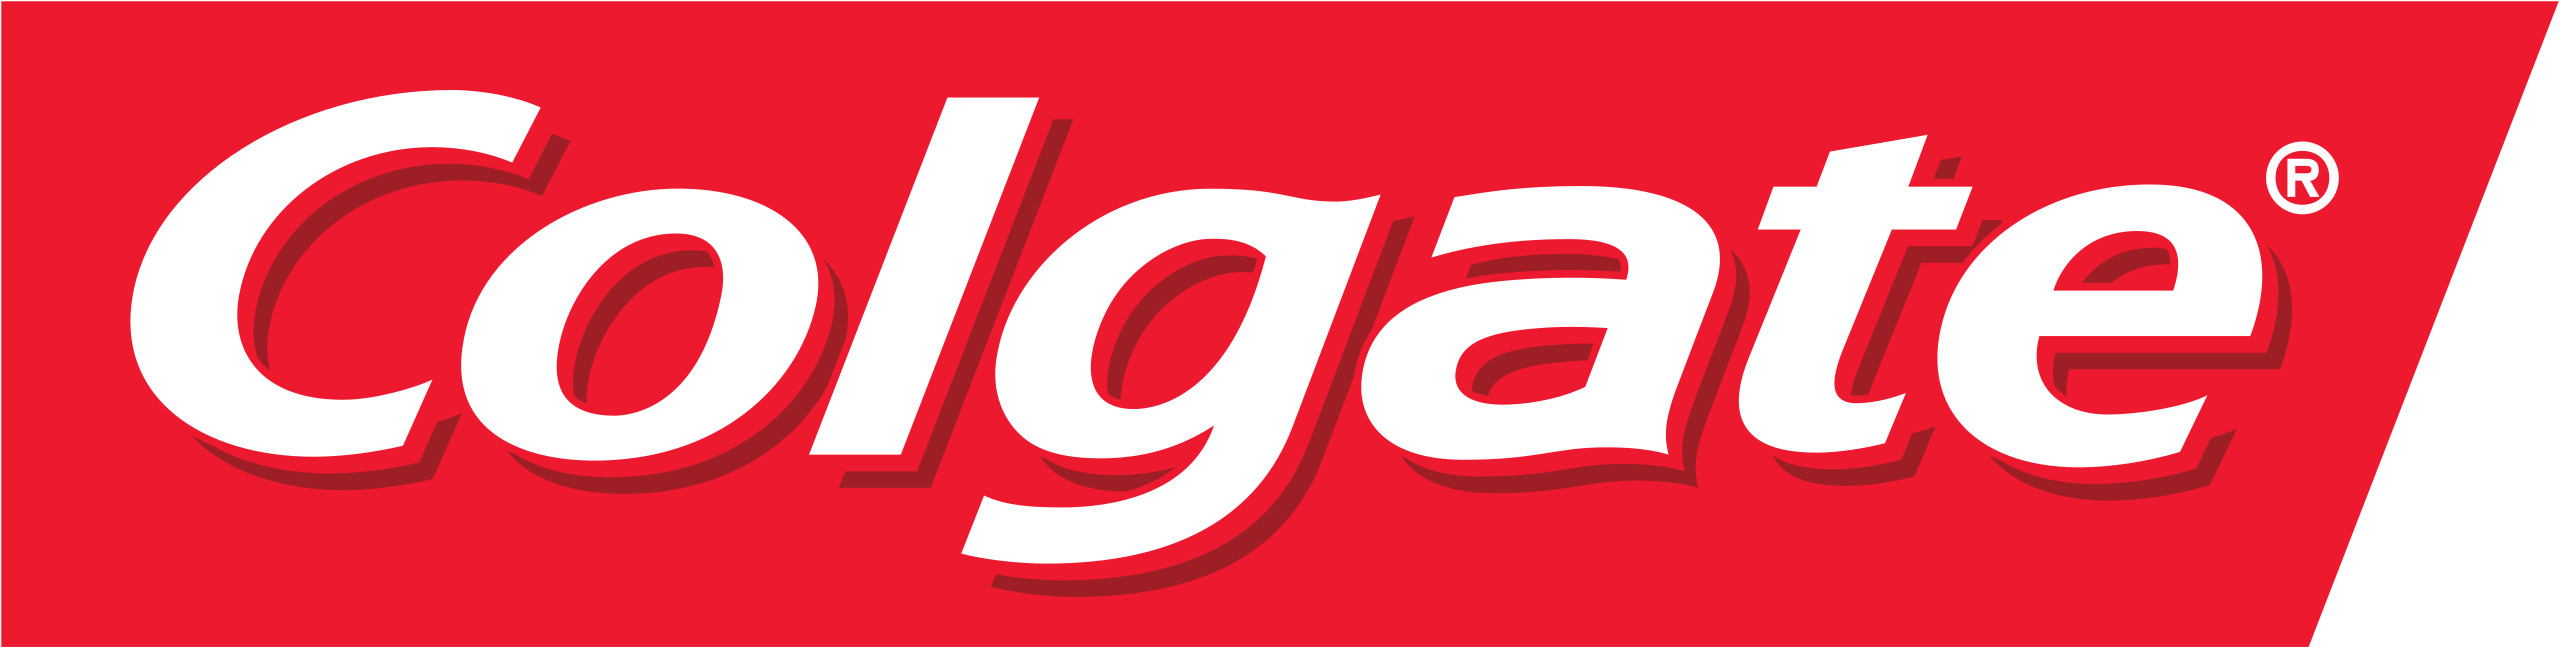 Colgate Brand Logo